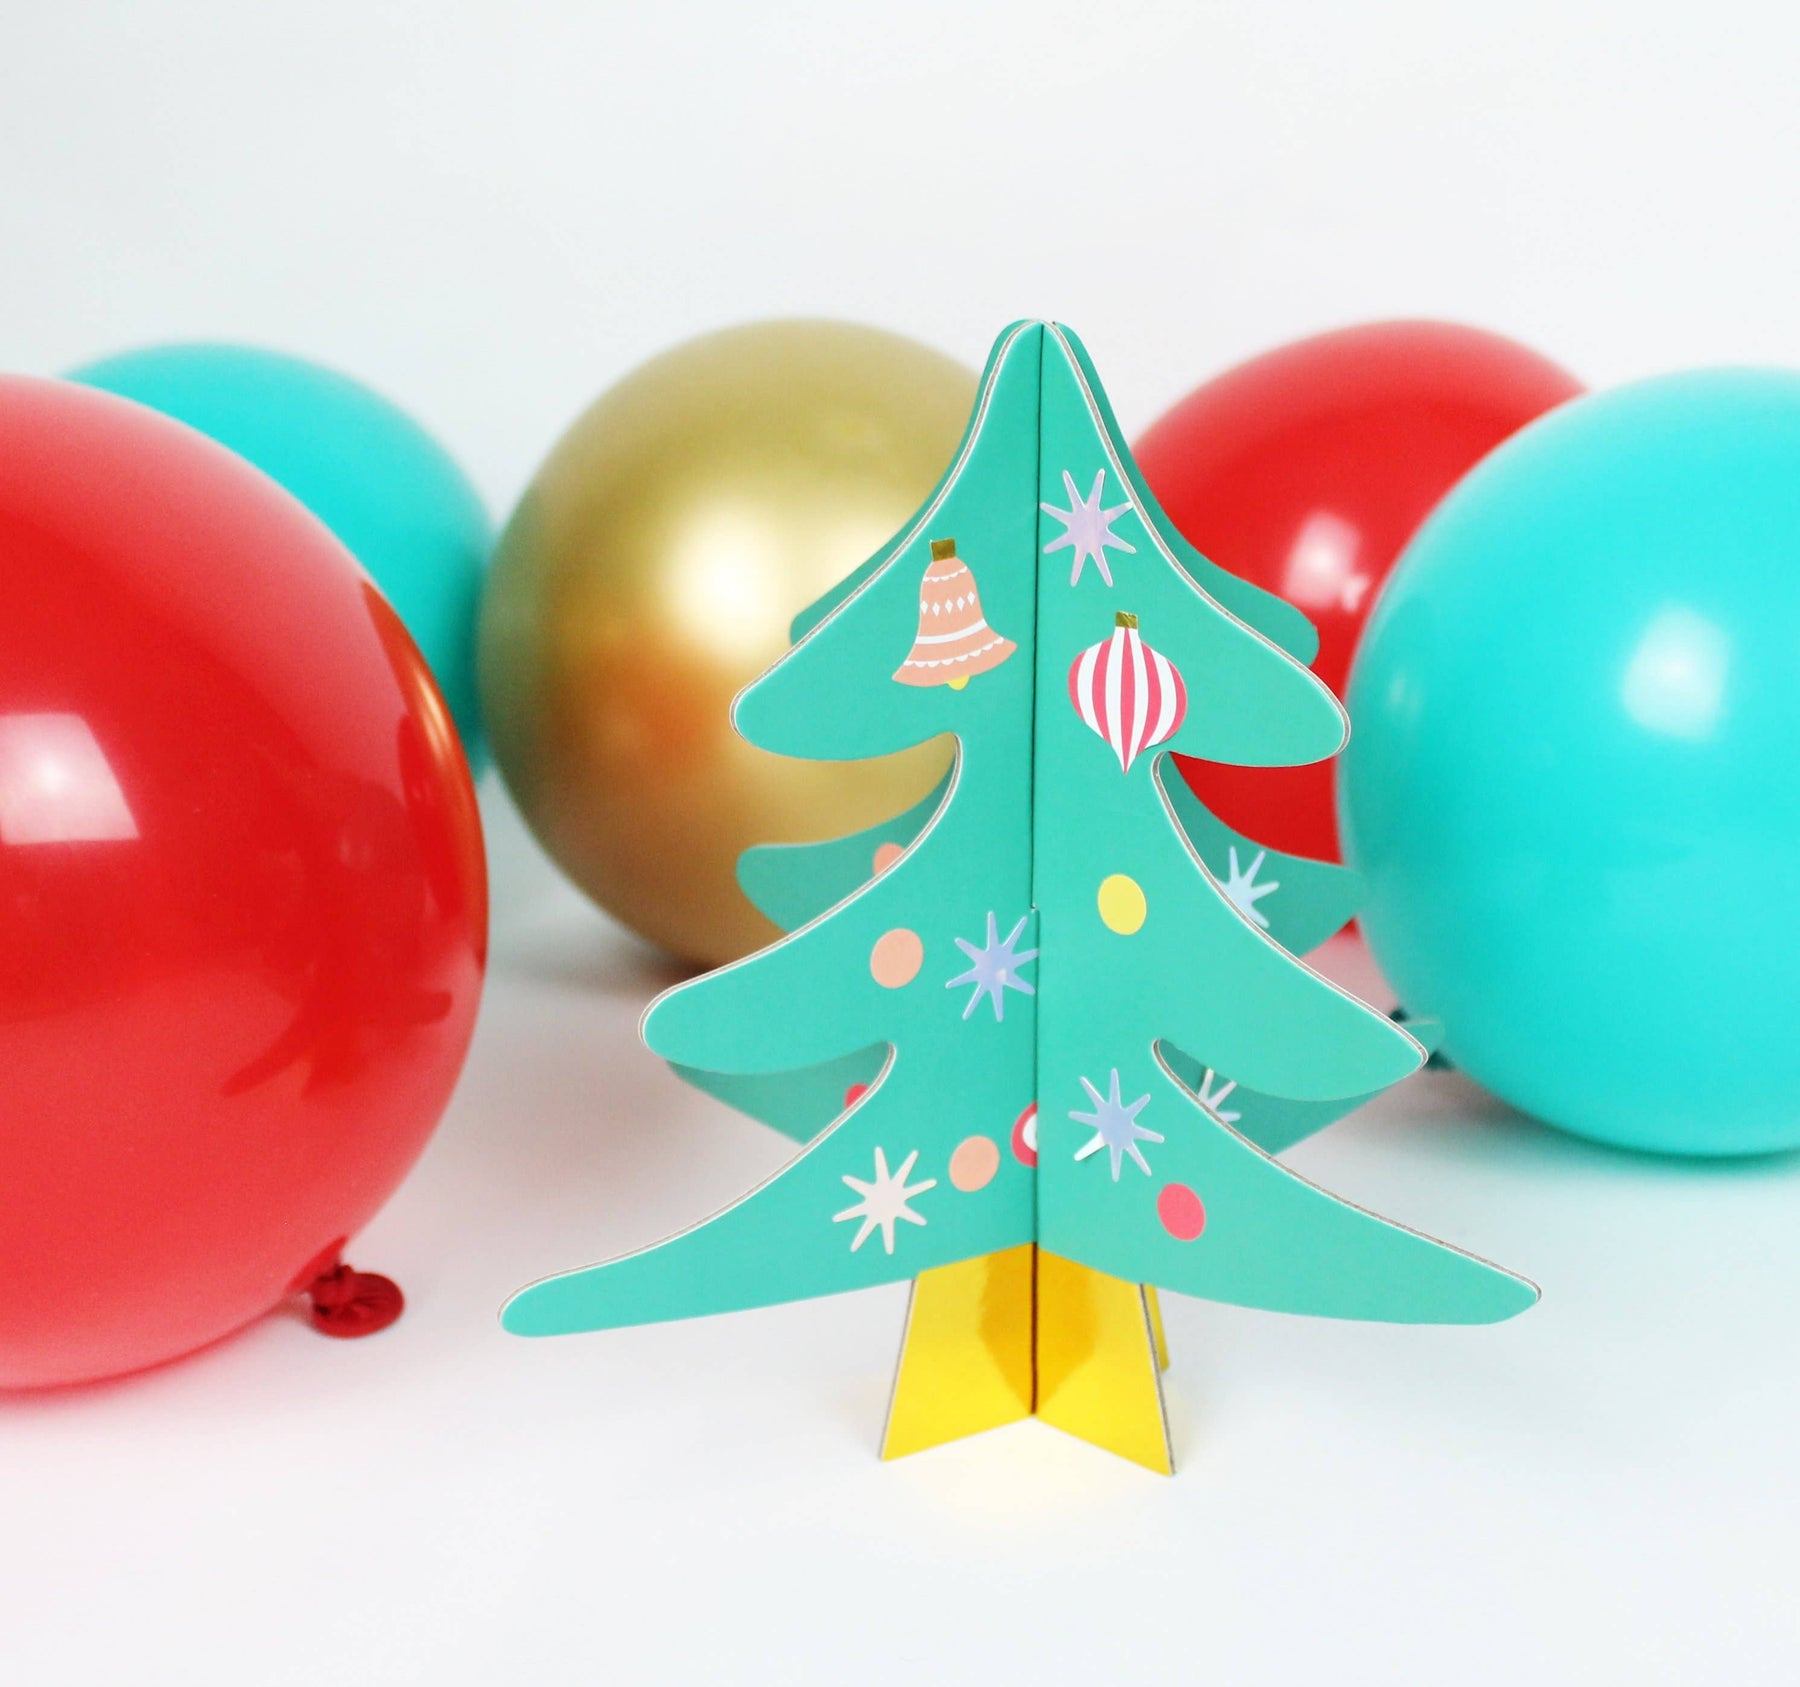 DIY Christmas Tree Decoration